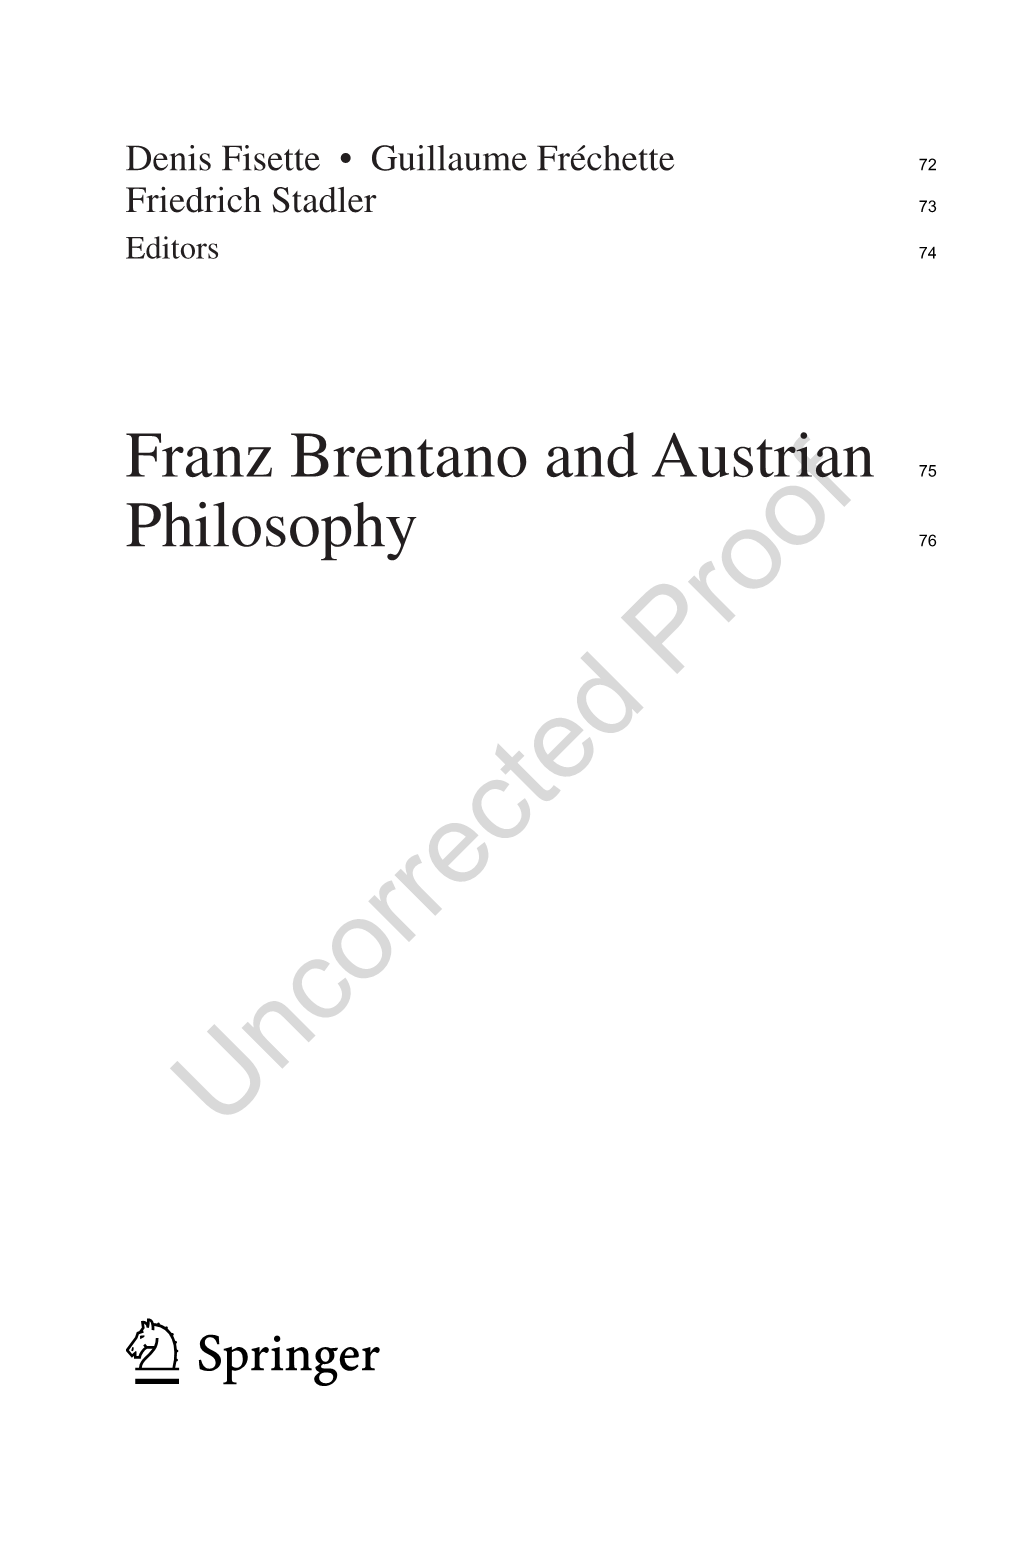 Franz Brentano and Austrian Philosophy, Vienna Circle Institute Yearbook 24, 252 D